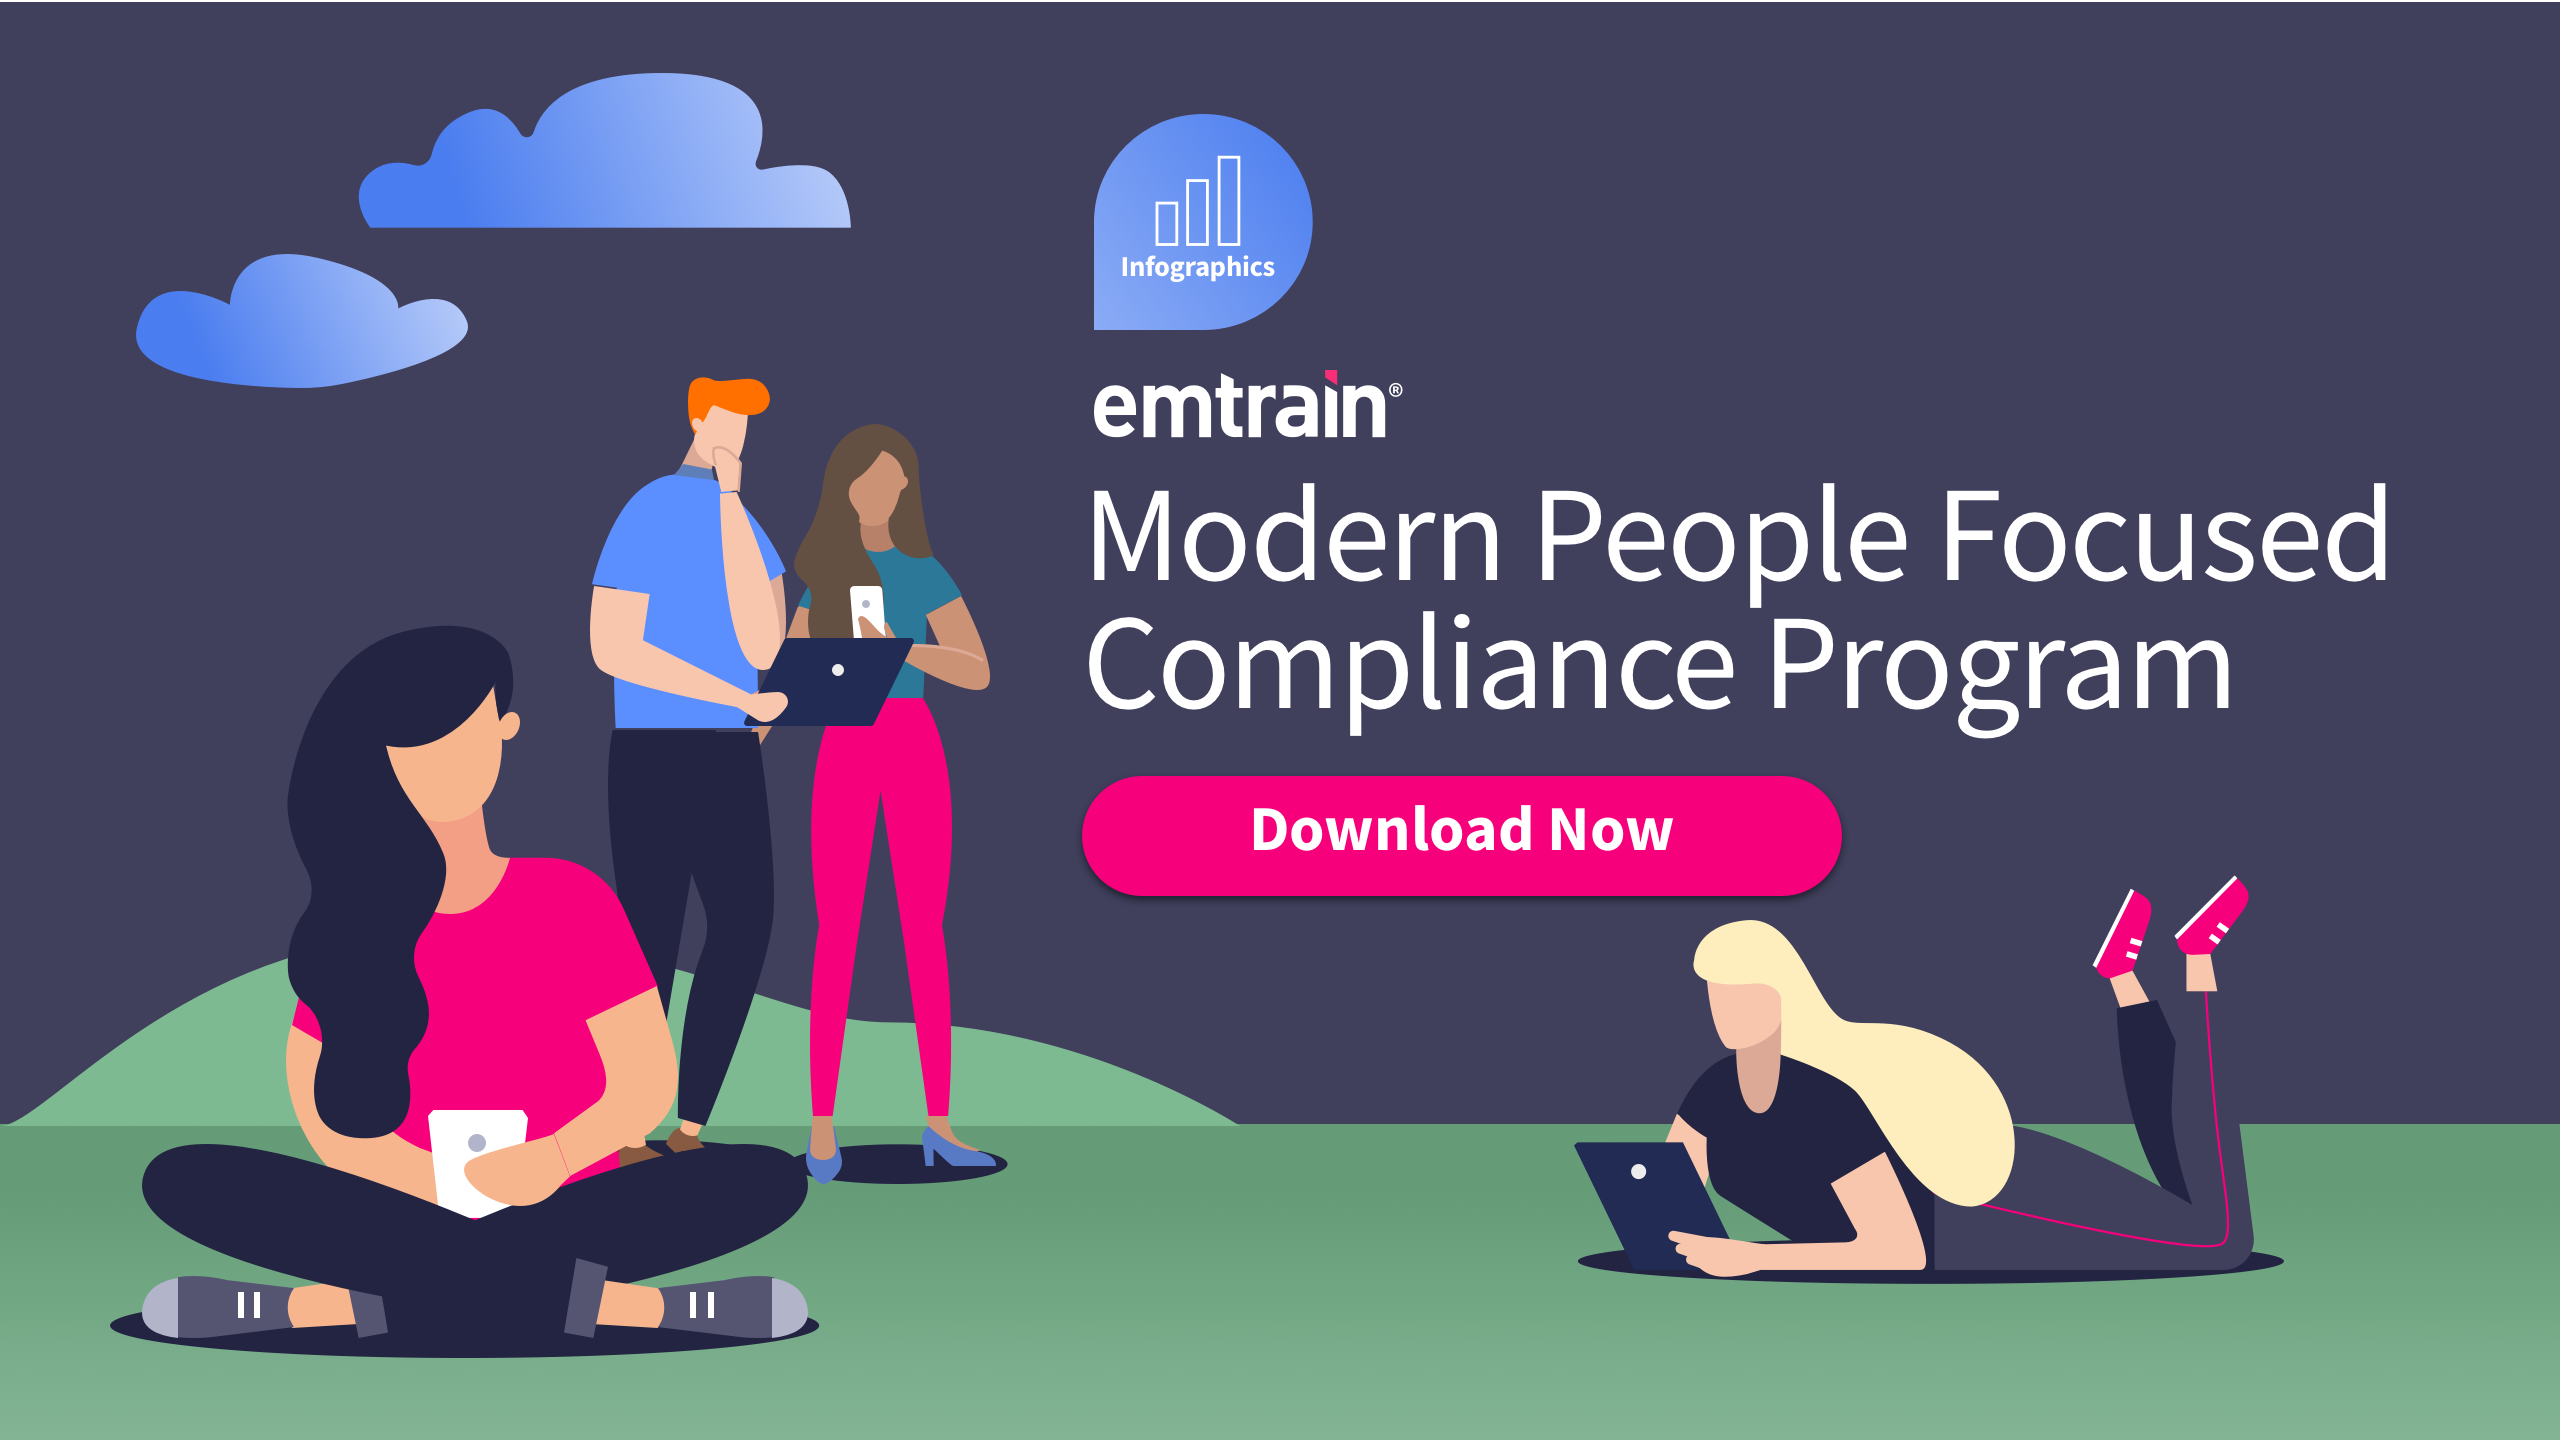 A Modern People Focused Compliance Program